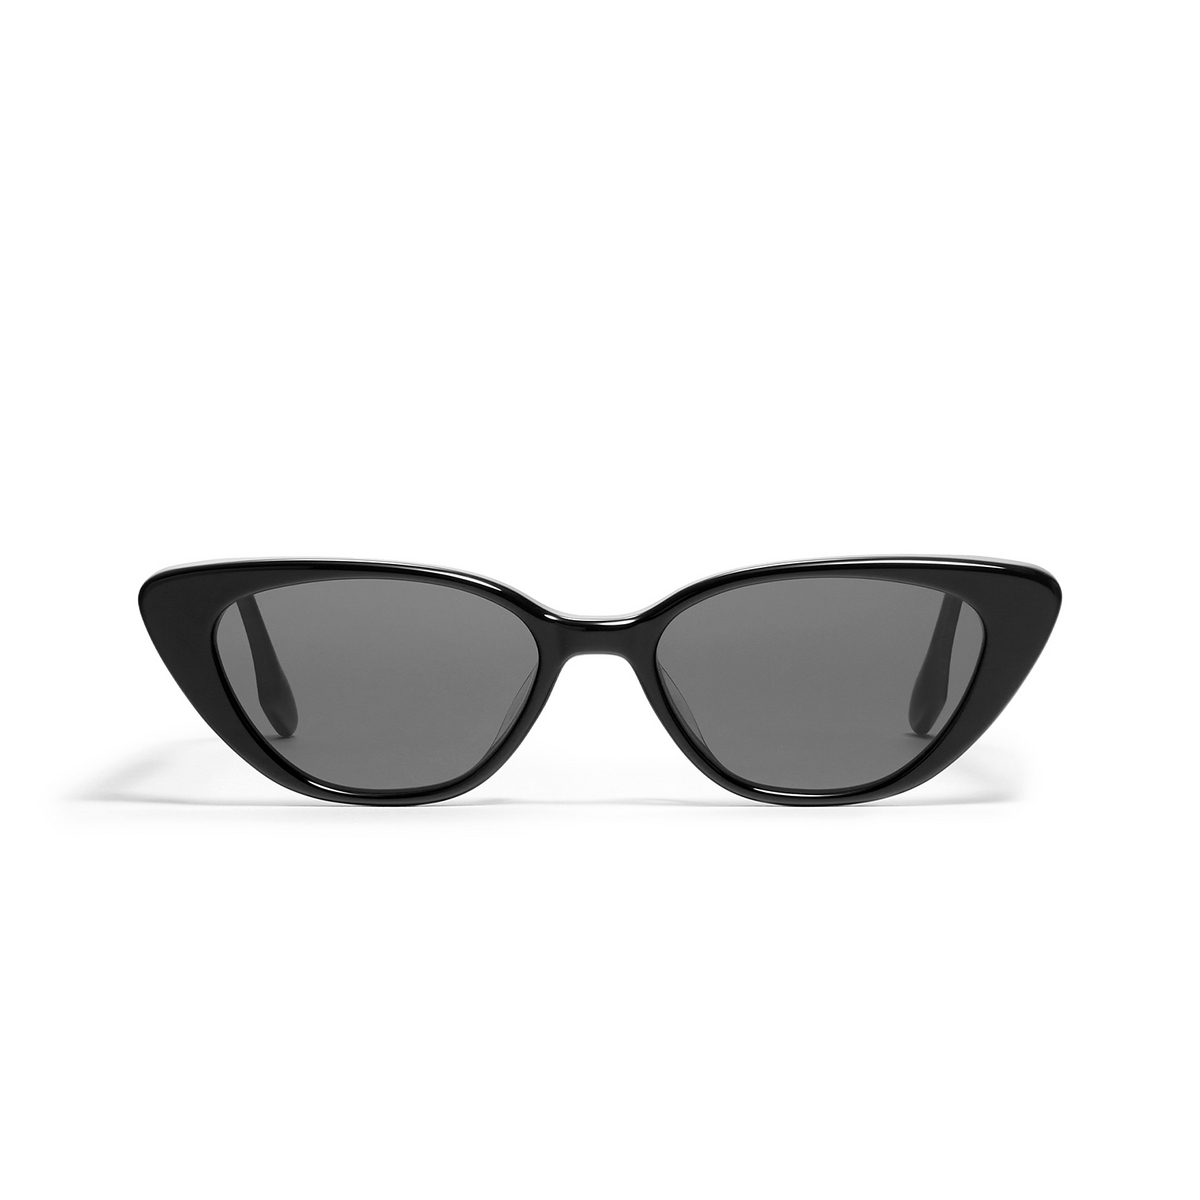 Gentle Monster CRELLA Sunglasses 01 Black - front view